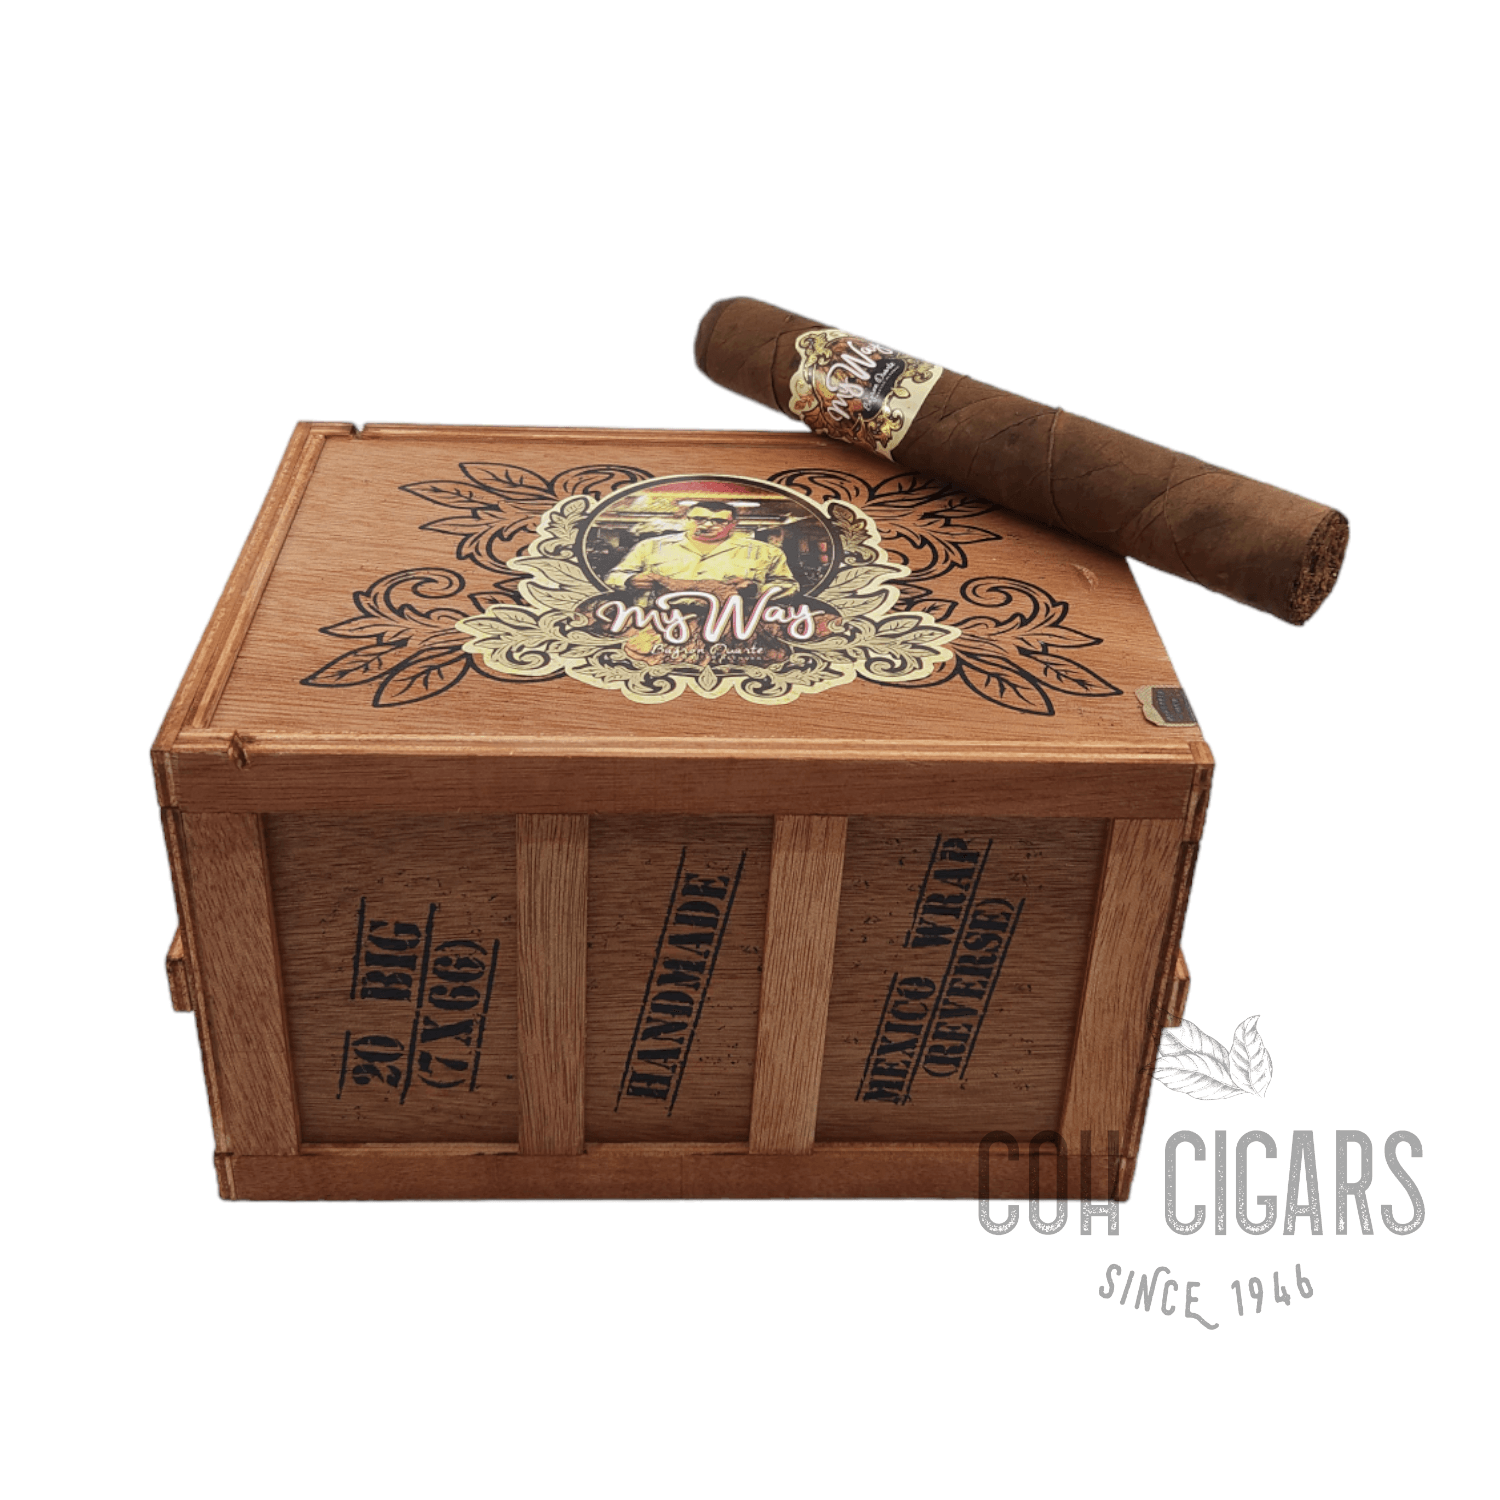 Oscar Valladares Cigar | My Way By Bayron Duarte HD | Box 20 - hk.cohcigars